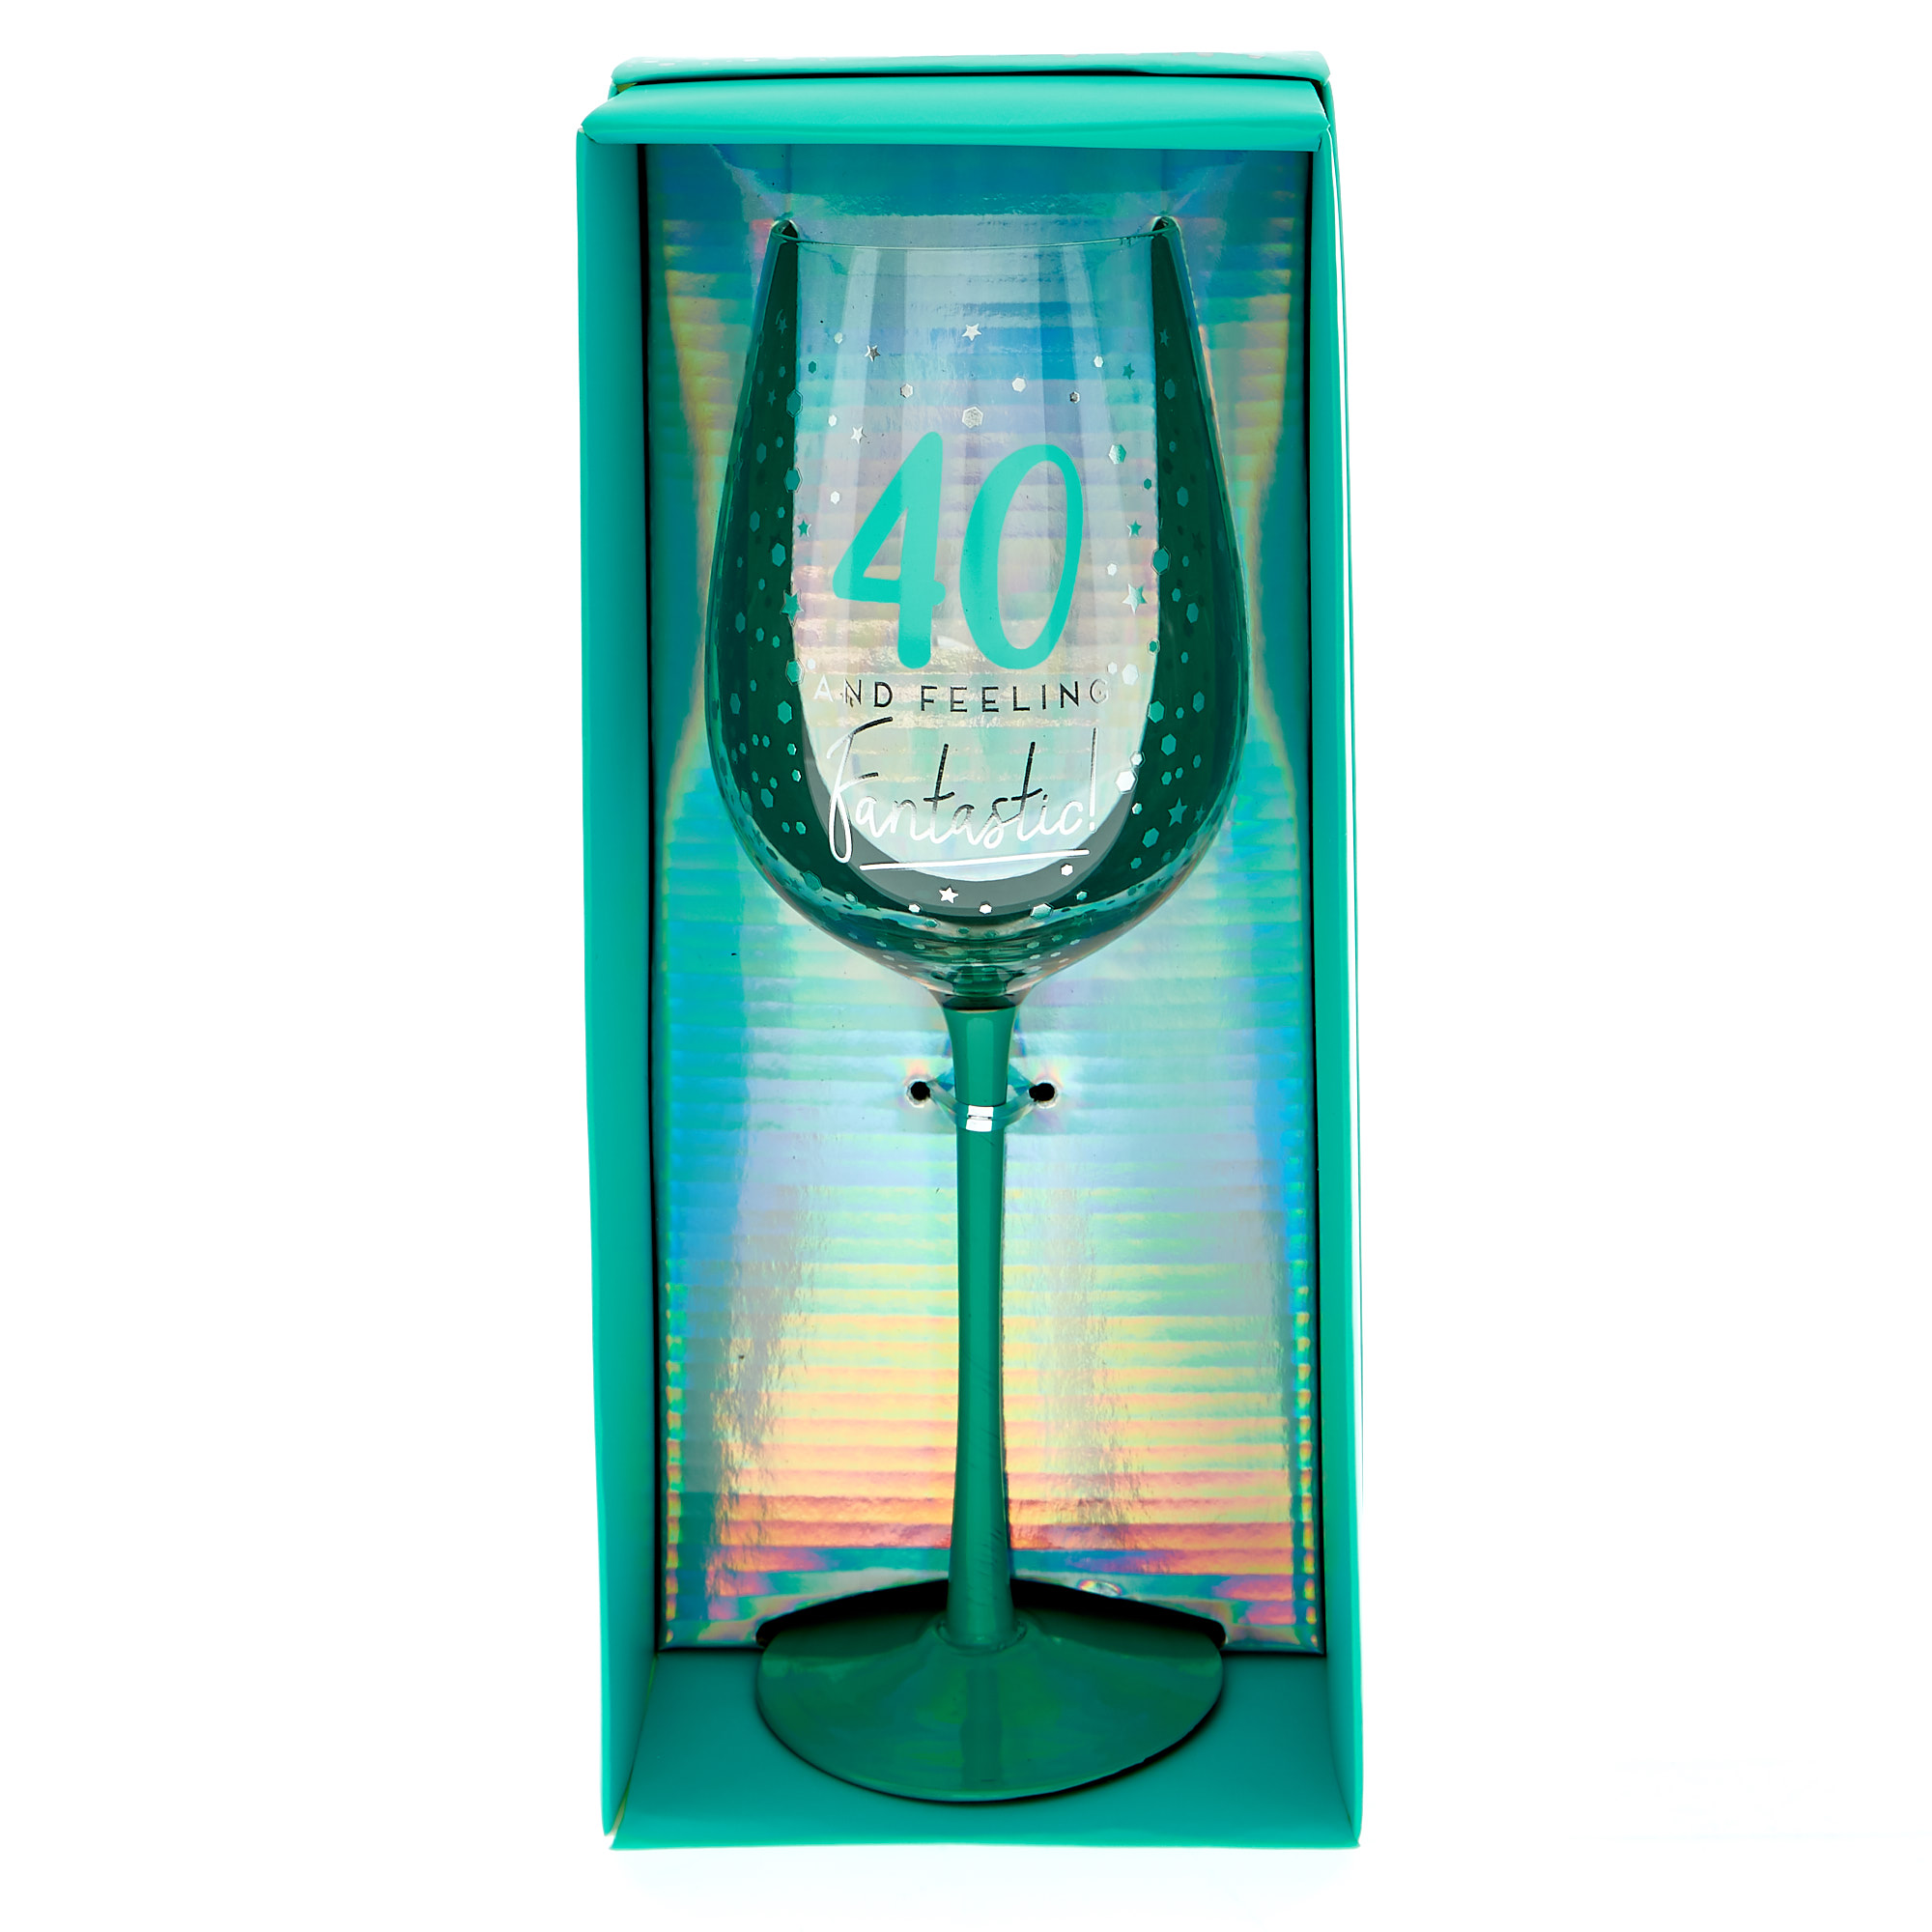 40 And Feeling Fantastic Wine Glass